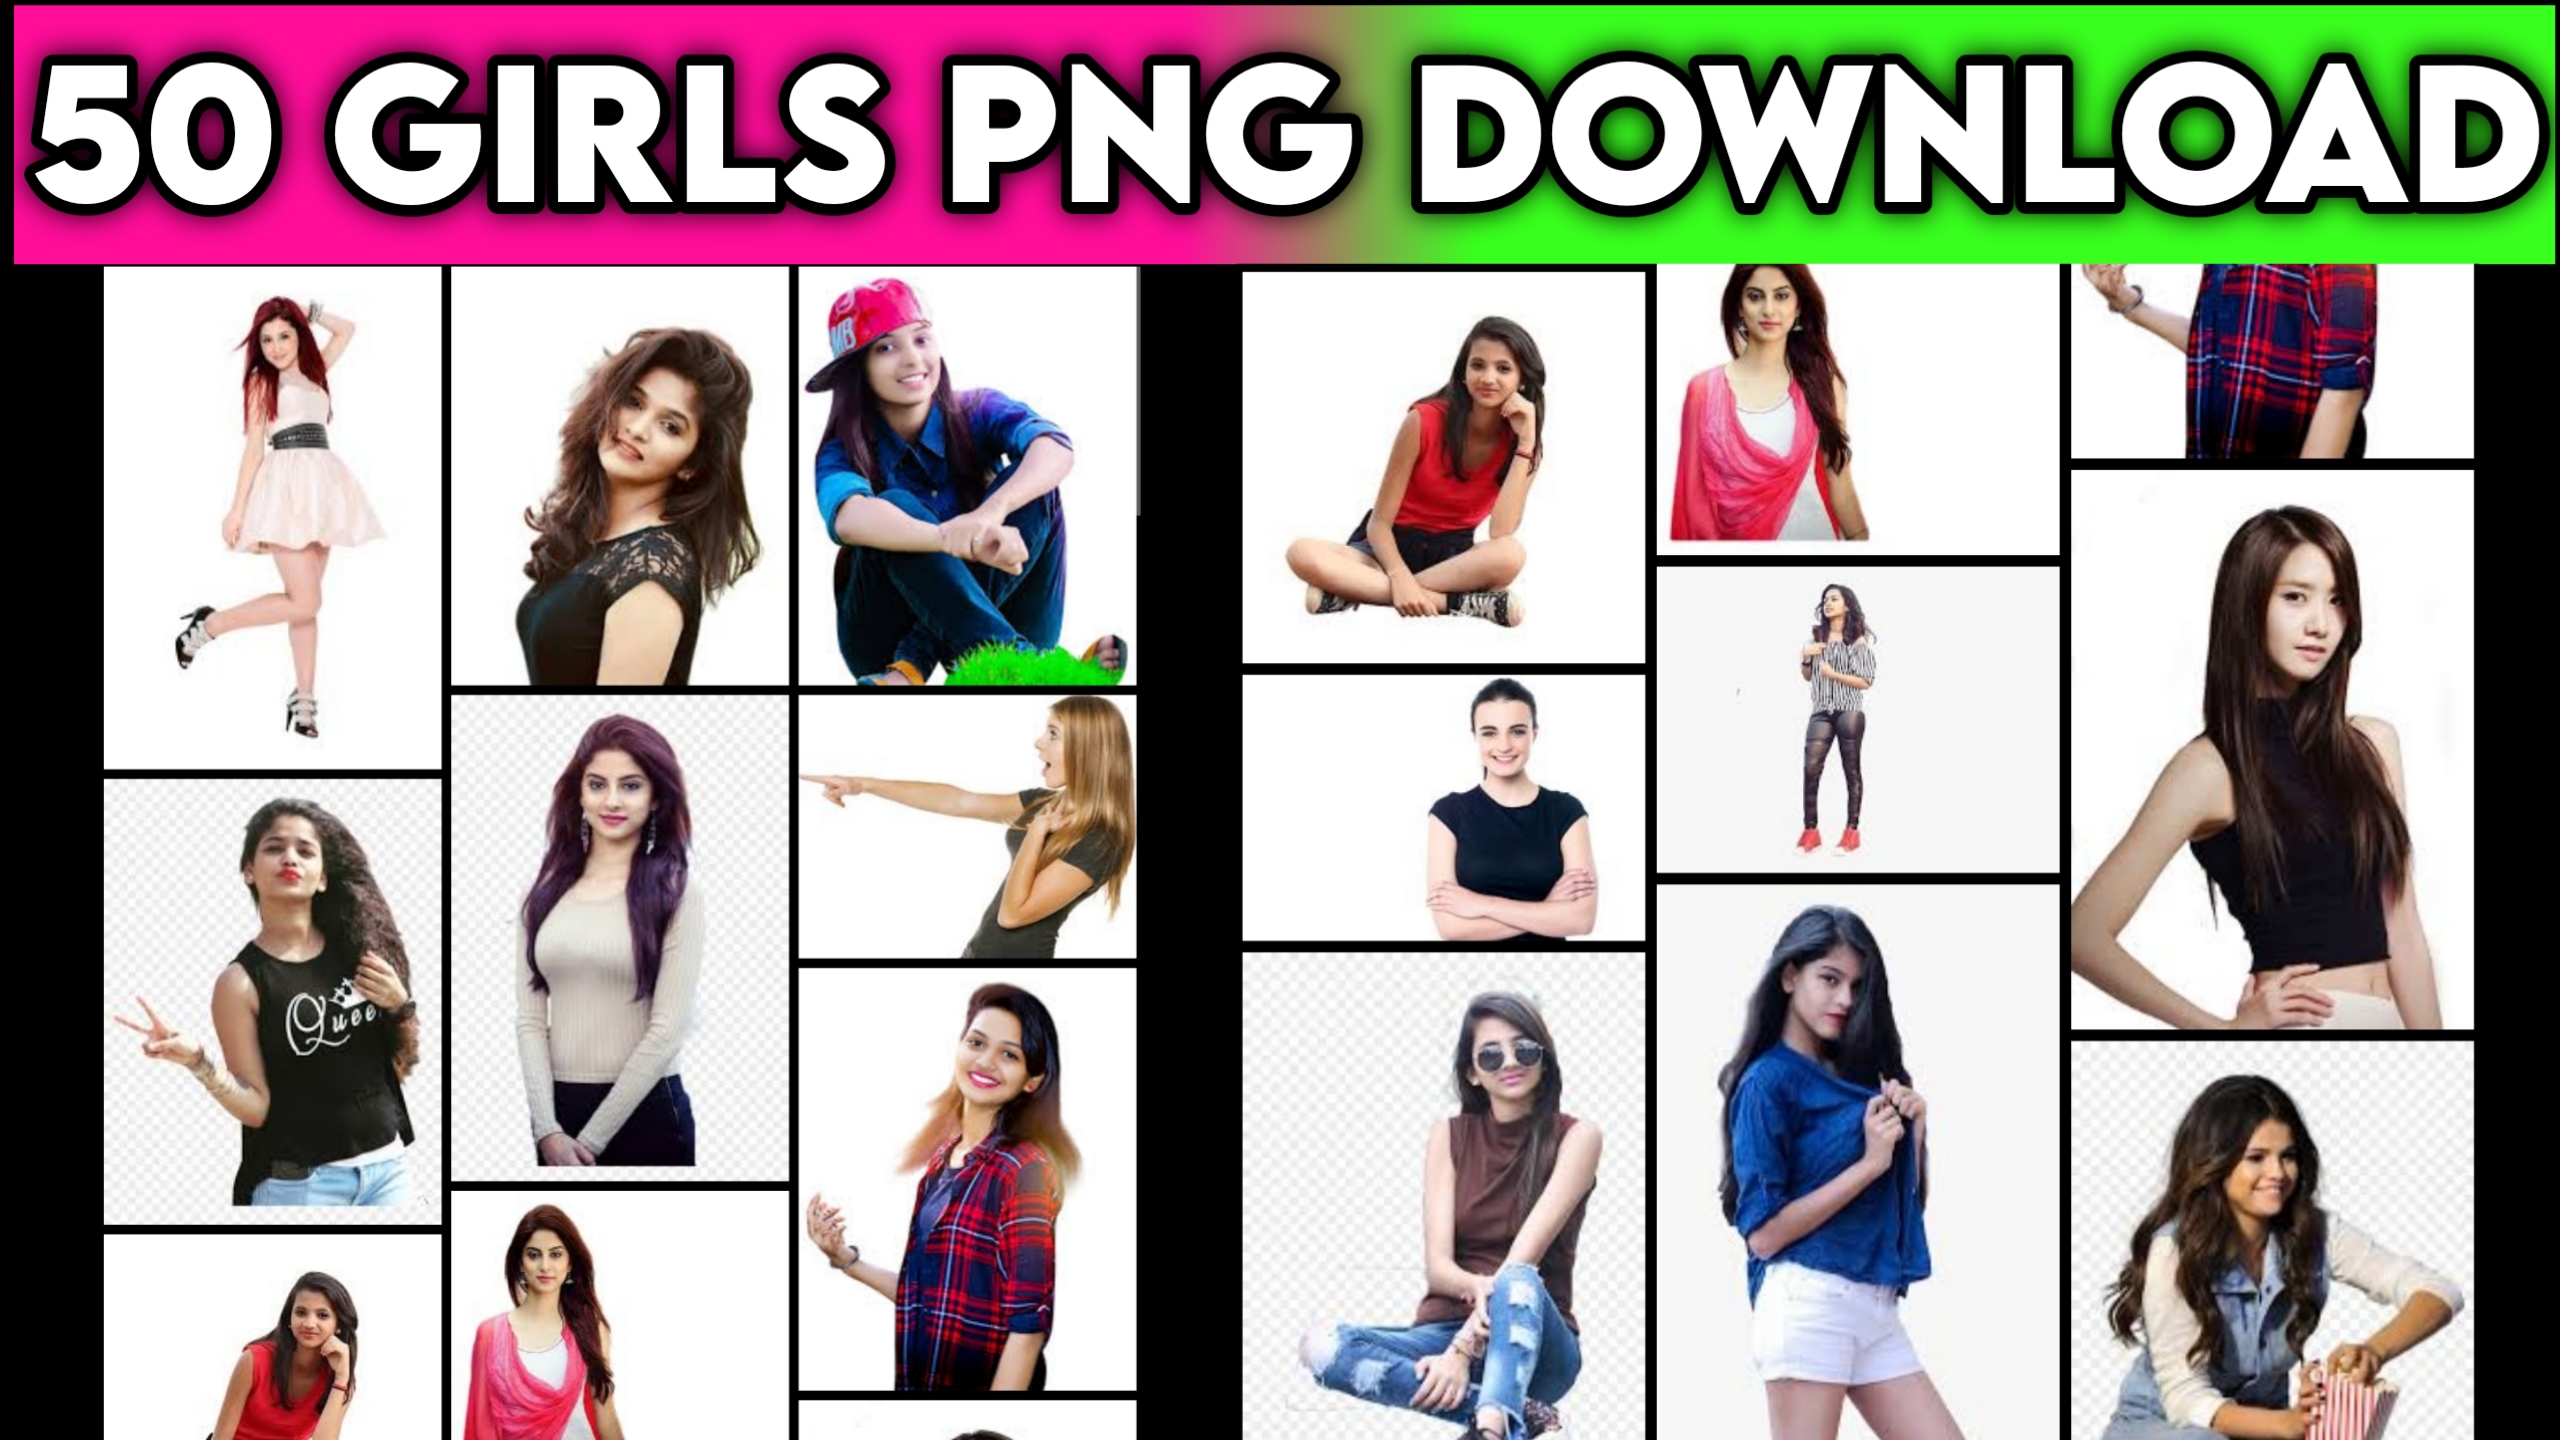 100 Girls Png Download 2021 Avee Player By DjDevrajKasya